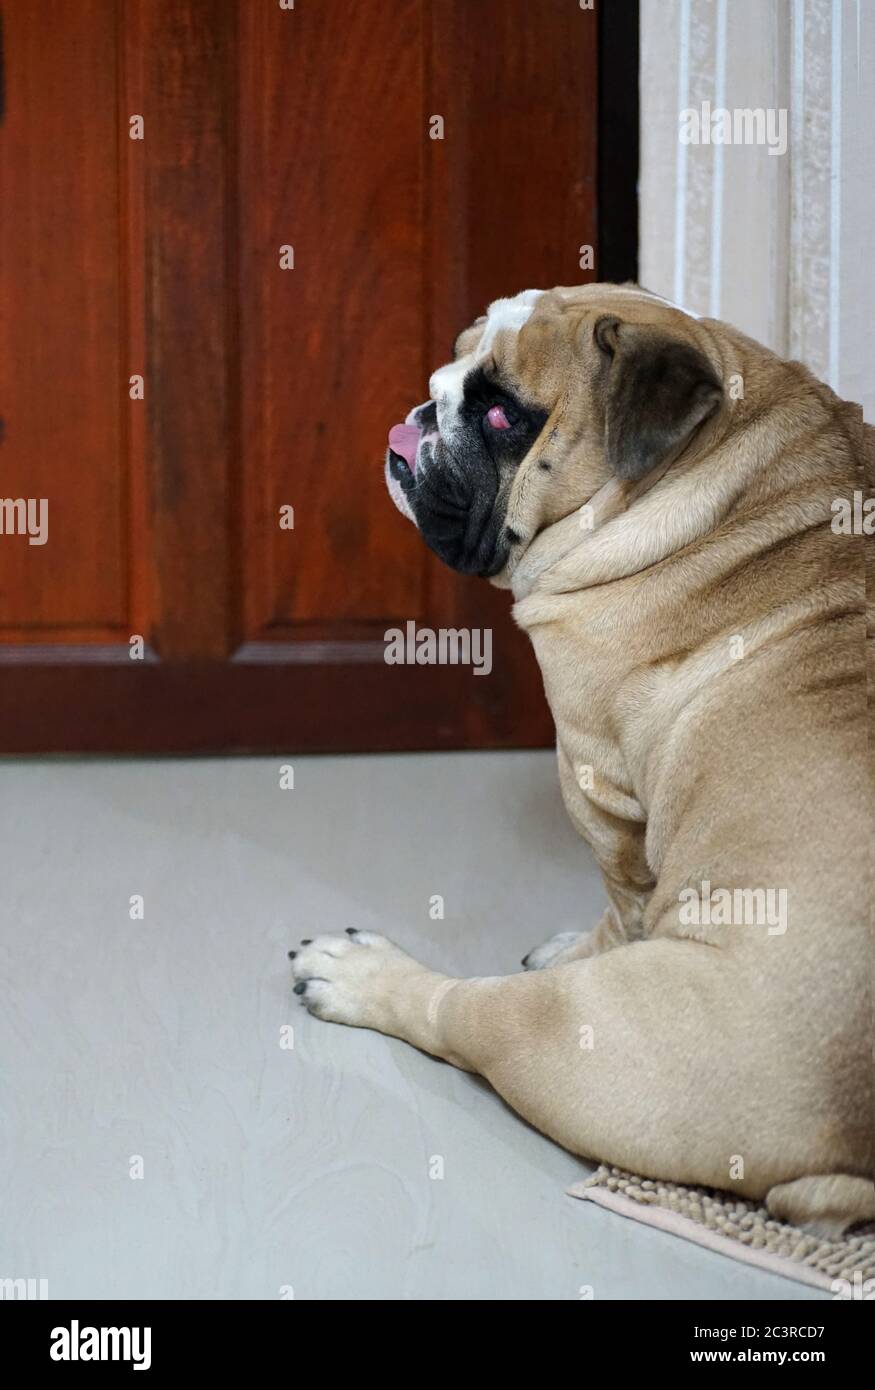 Funny English bulldog sitting in front of wooden door Stock Photo ...